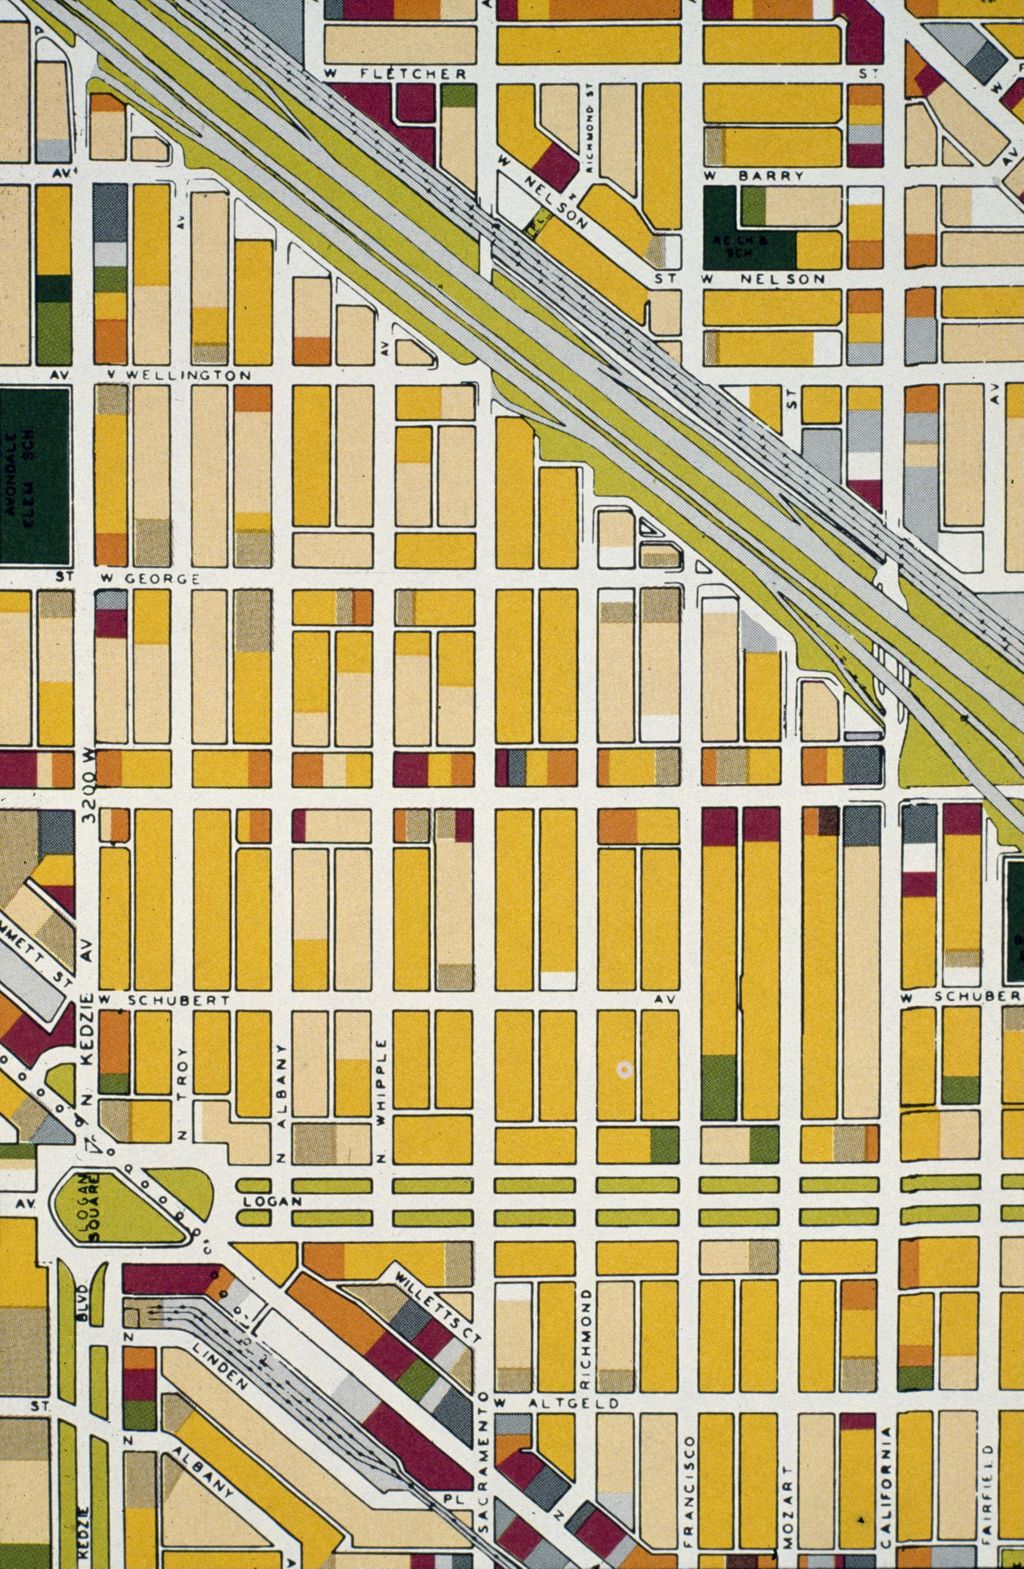 Miniature of Land use, Logan Square and Avondale